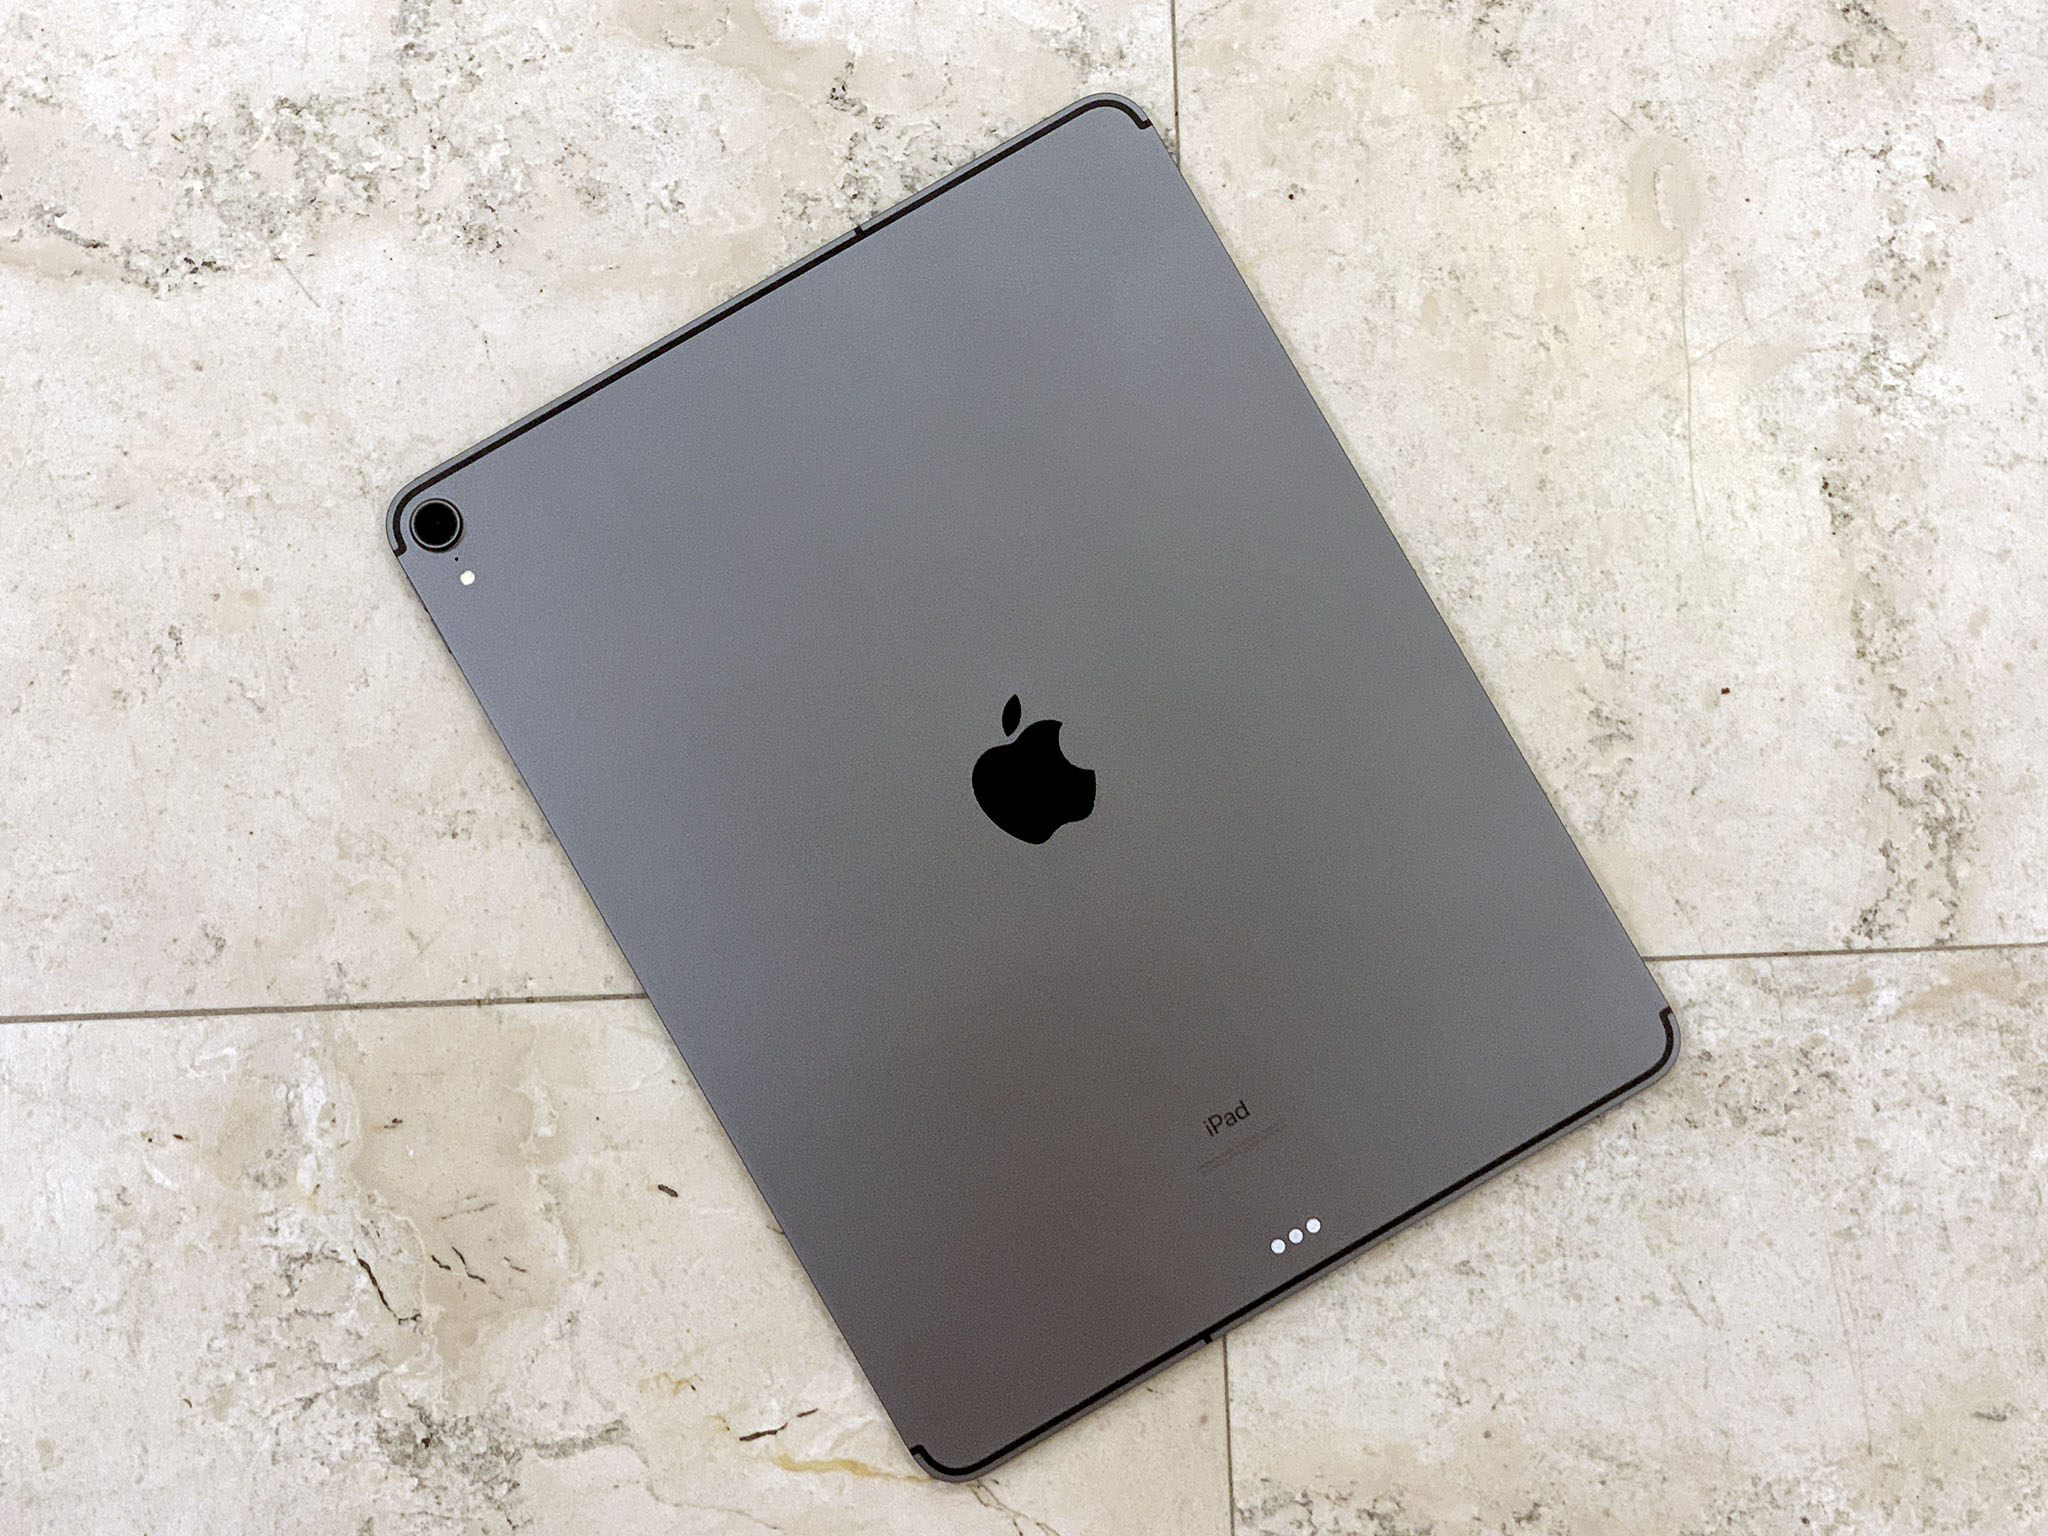 iPad Pro space gray back